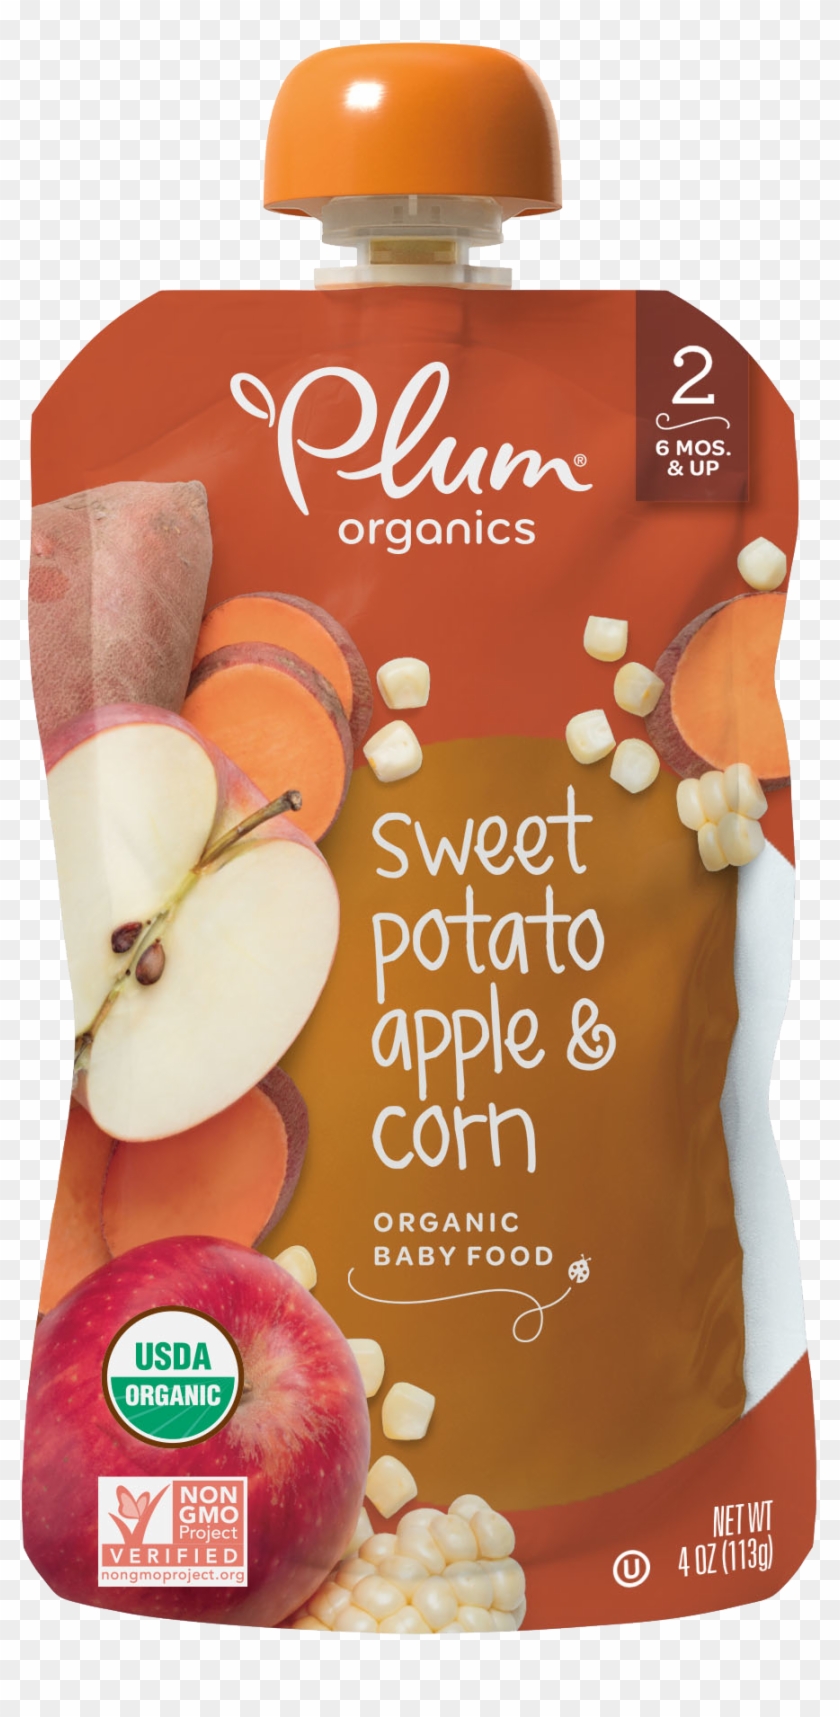 Sweet Potato, Apple & Corn - Baby Food Packaging Clipart #1069081